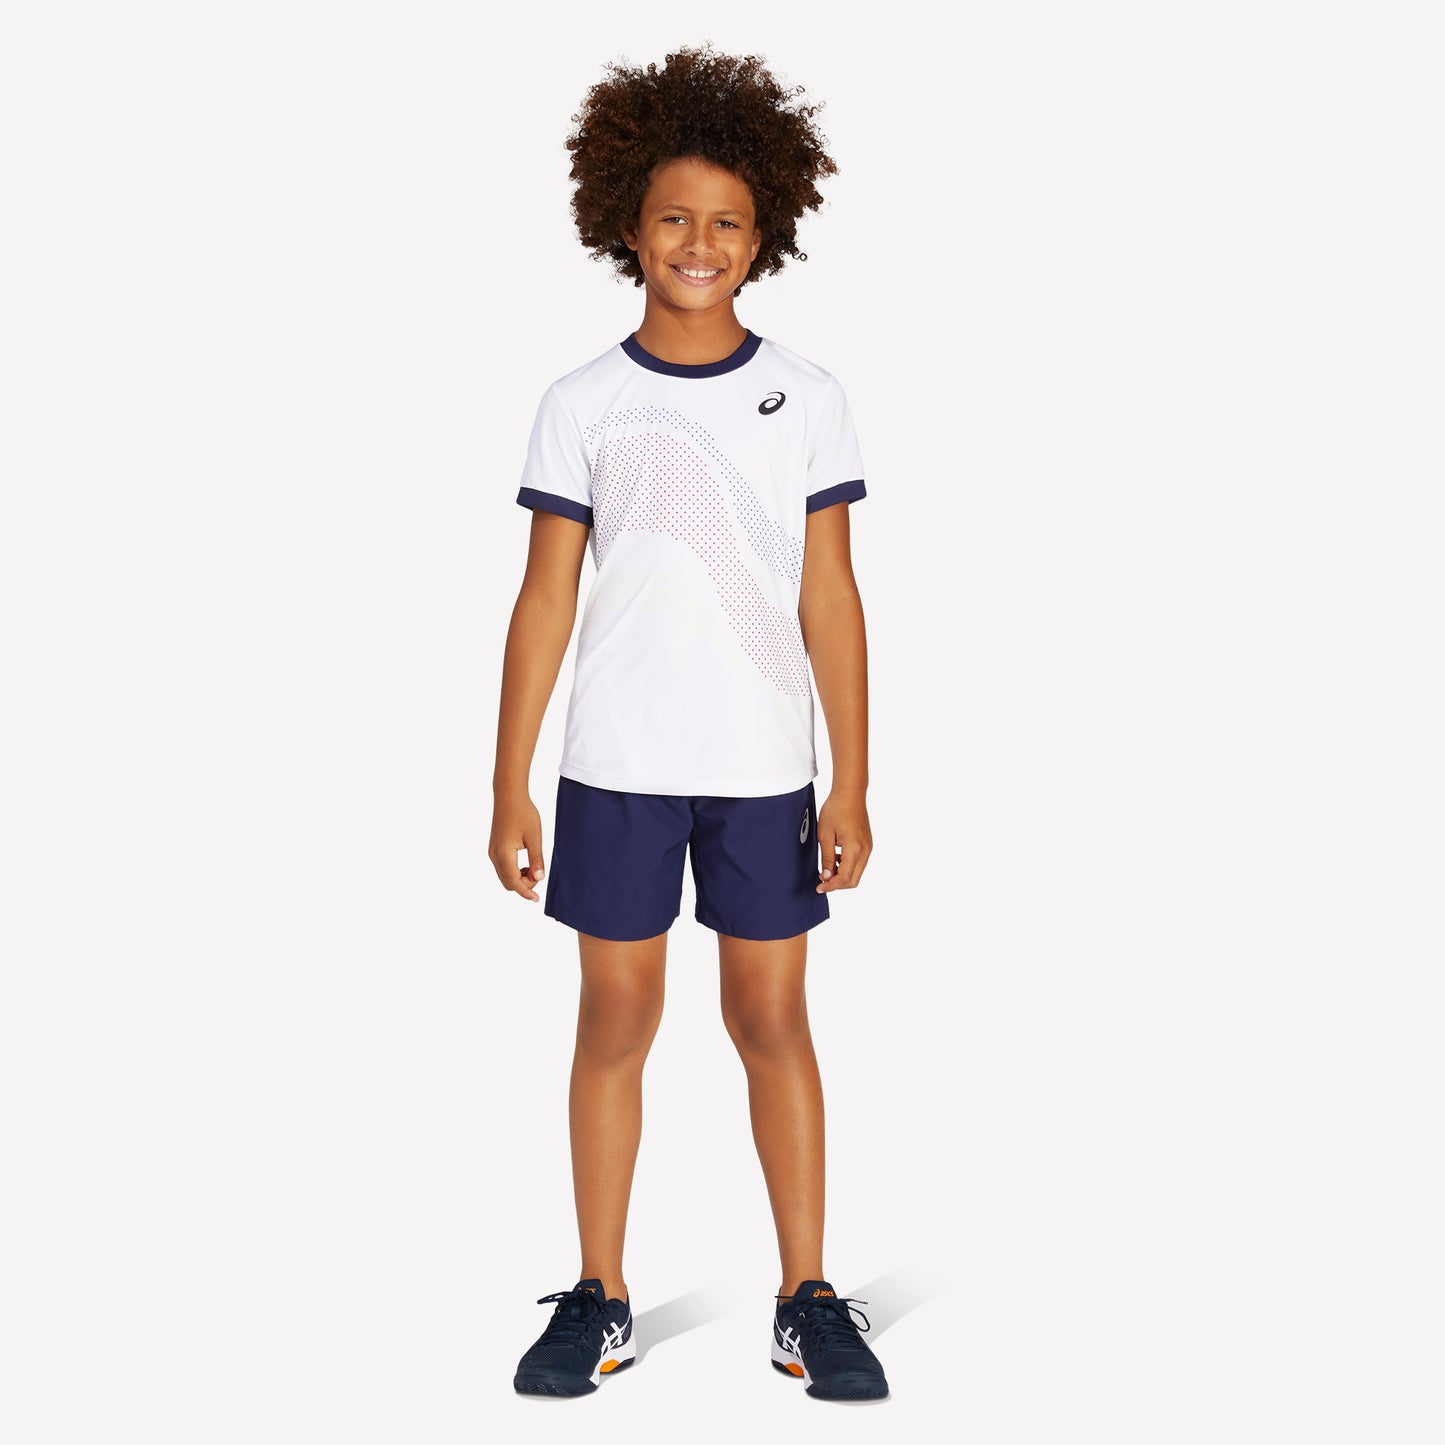 ASICS Match Boys' Graphic Tennis Shirt White (4)